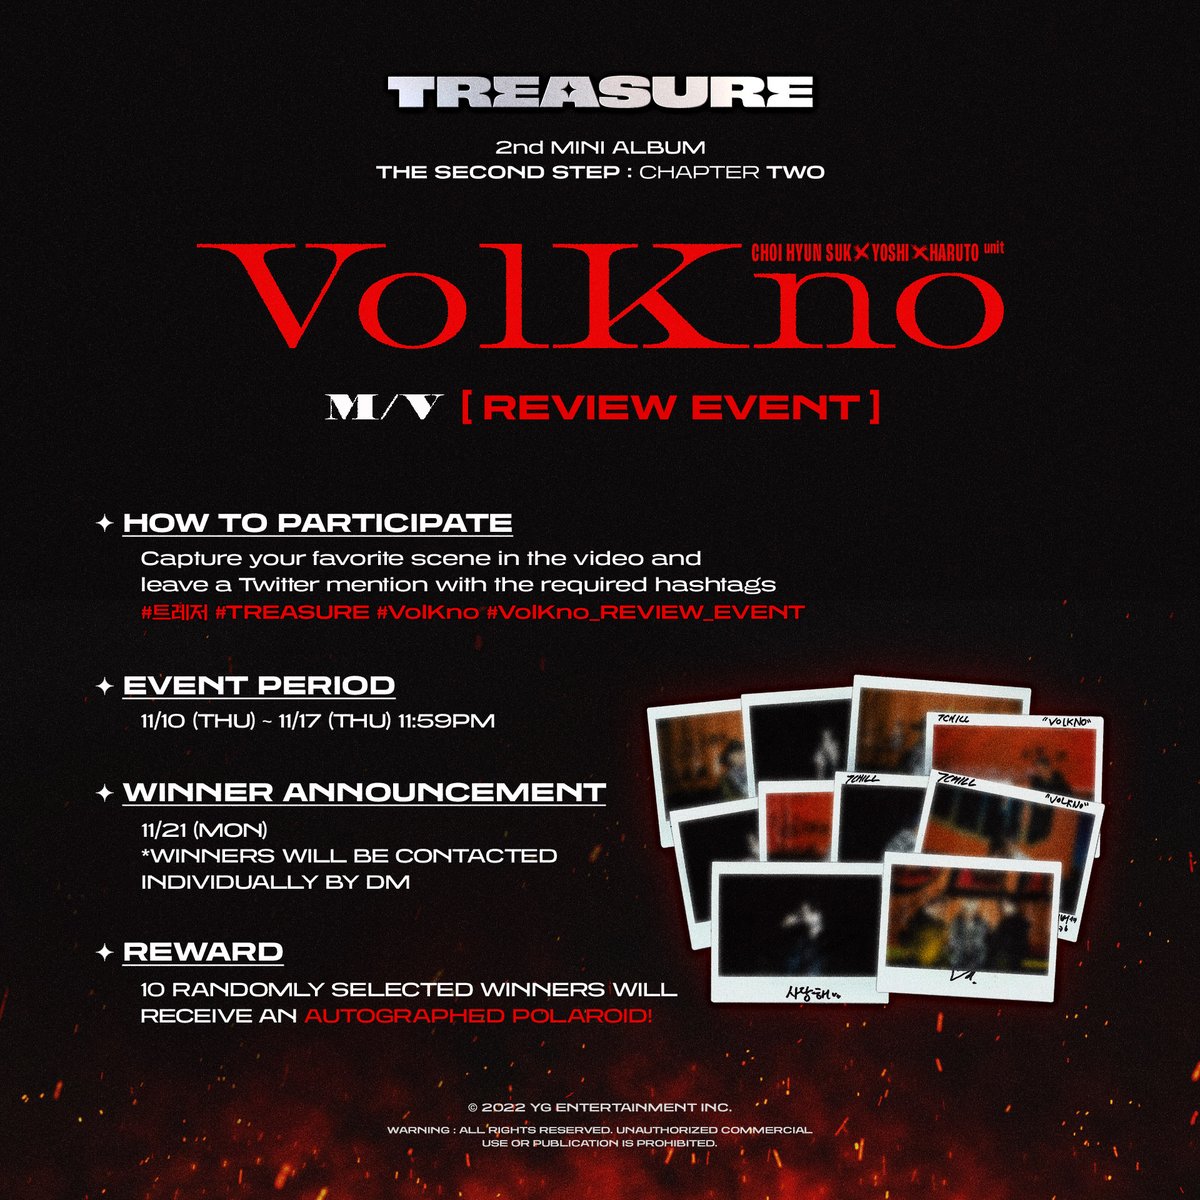 #TREASURE - ‘VolKno’ M/V REVIEW EVENT

▶️ VIDEO LINK
youtu.be/Dbs3l_ZJR6o

#트레저 #2ndMINIALBUM #THESECONDSTEP_CHAPTERTWO #VolKno #MV #VolKno_REVIEW_EVENT #YG